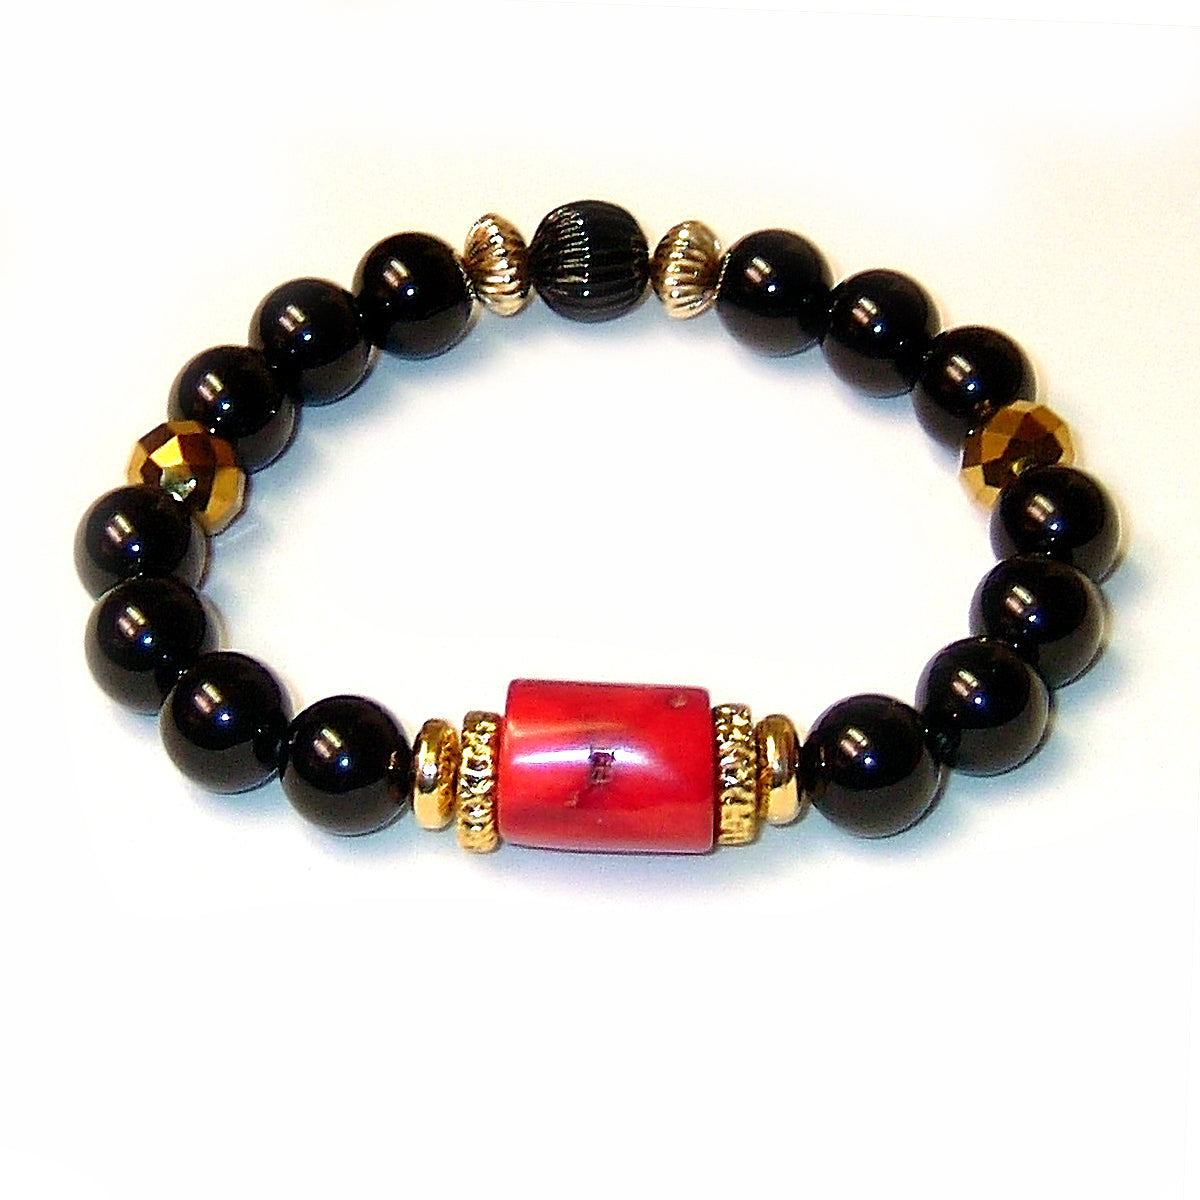 The Explorer Bracelet features red coral, black onyx, 14/20 gold plated rondelles and faceted golden quartz.